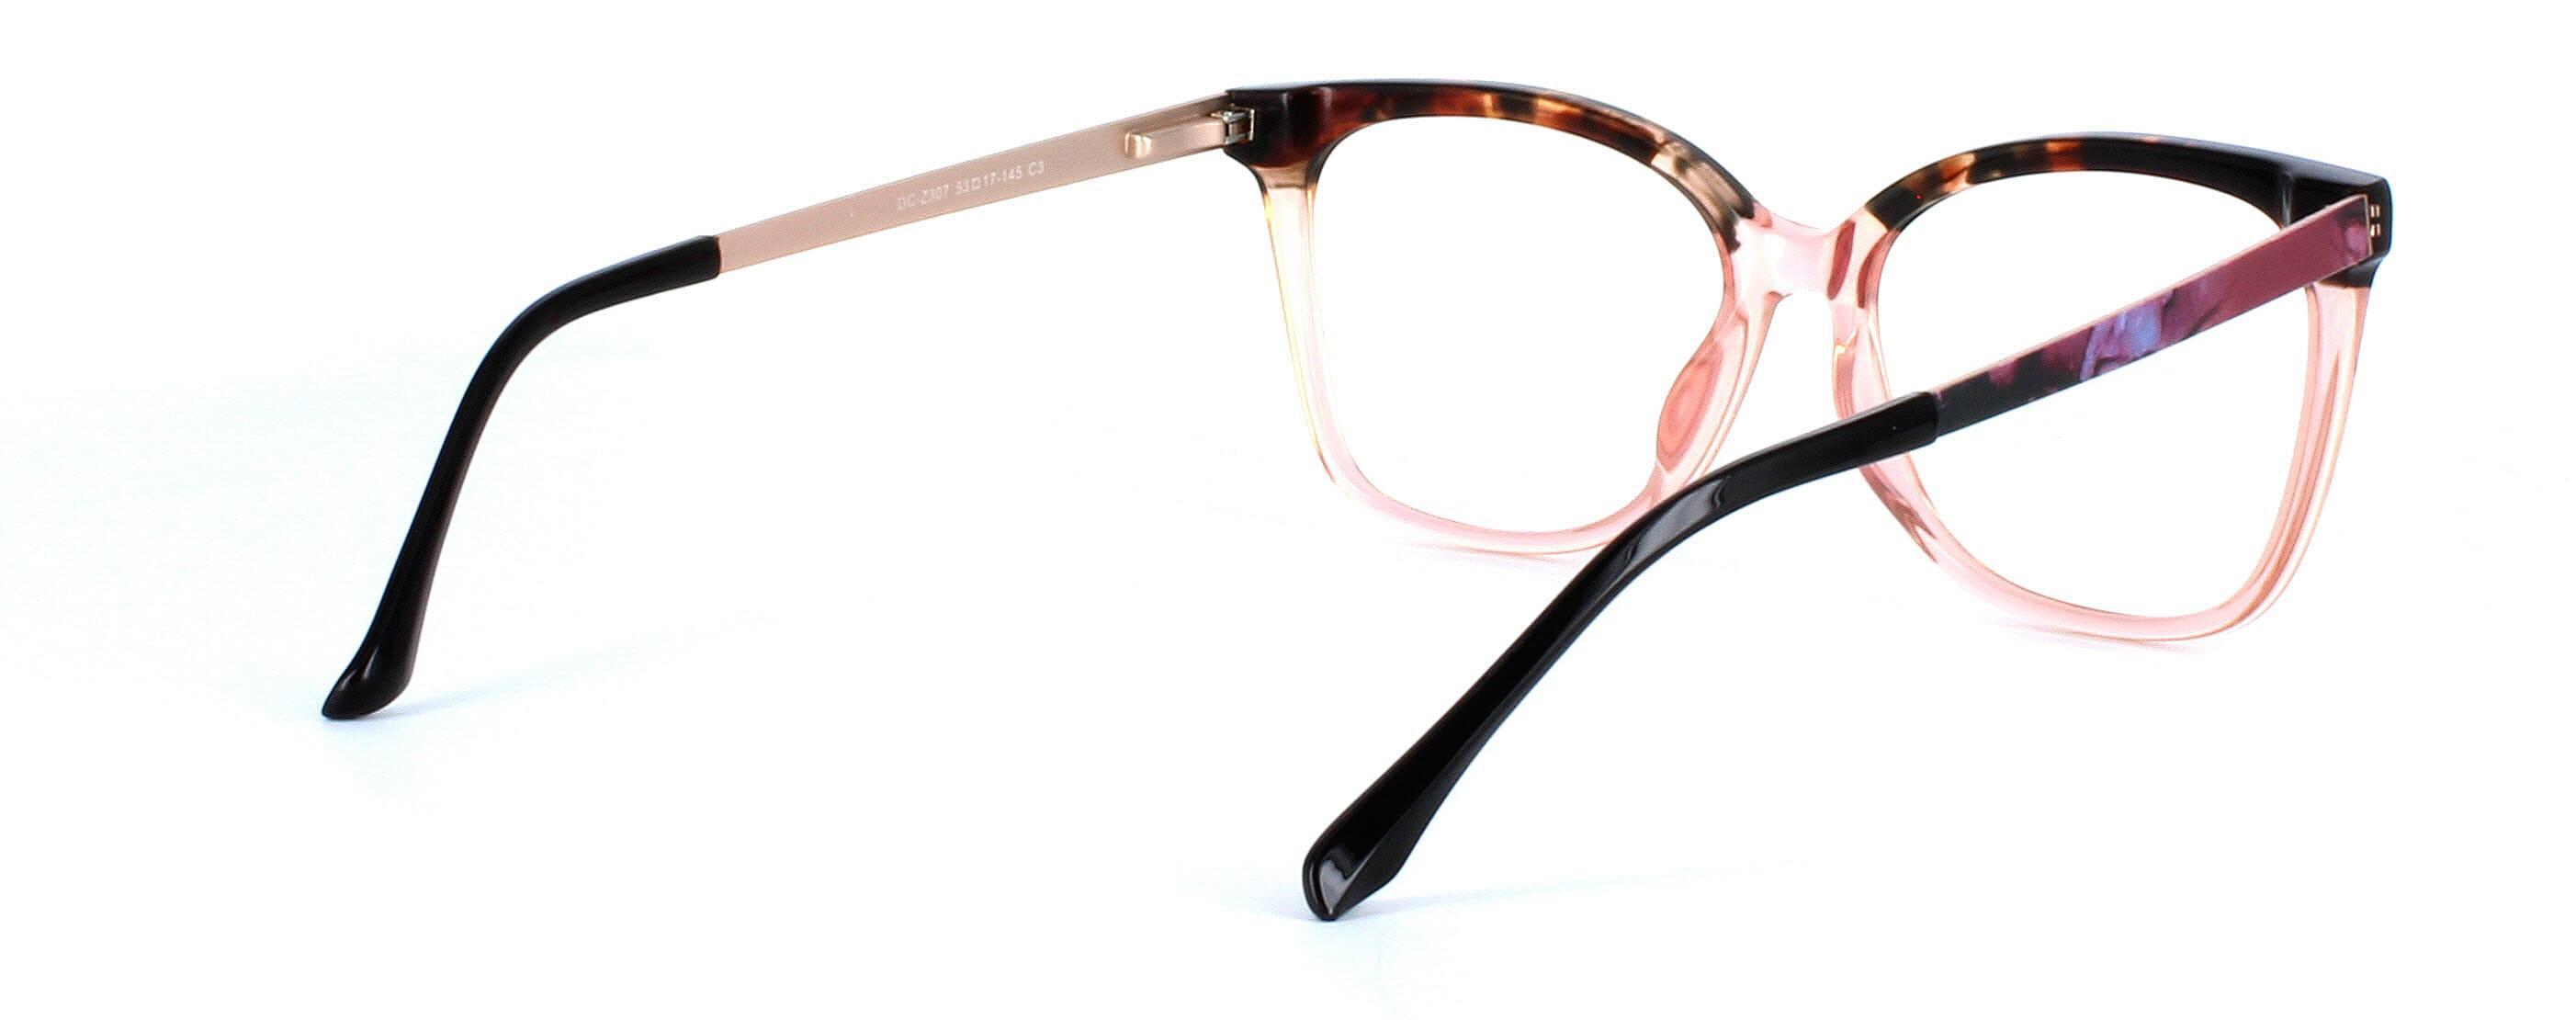 Carina - ladies 2-tone plastic glasses with square shaped lenses - image view 4